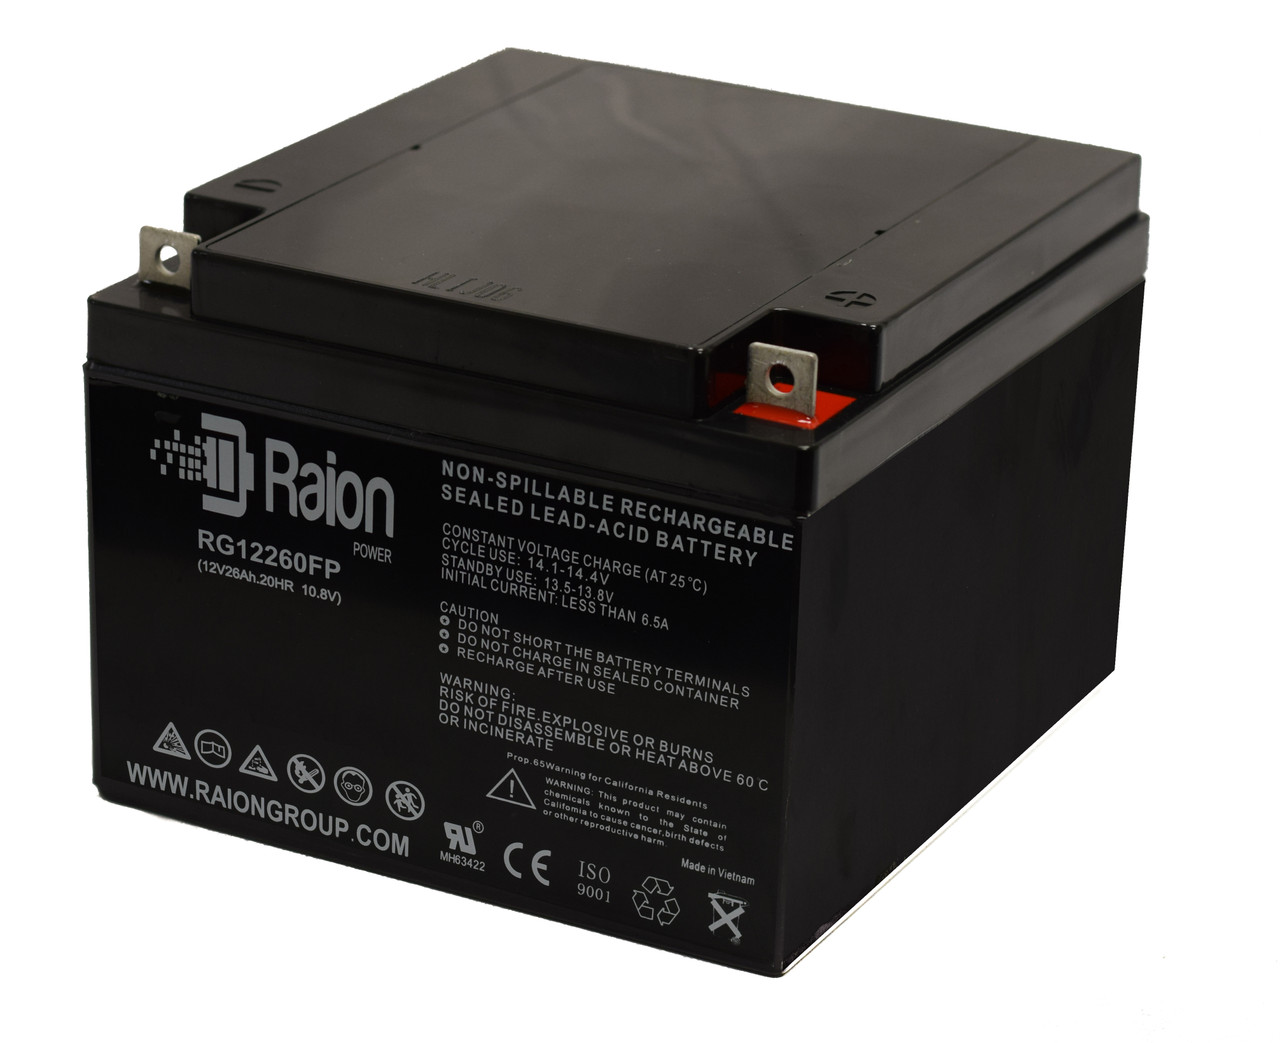 Raion Power Replacement 12V 26Ah Battery for Dewalt CM600 Type 1 Lawn Mower - 1 Pack